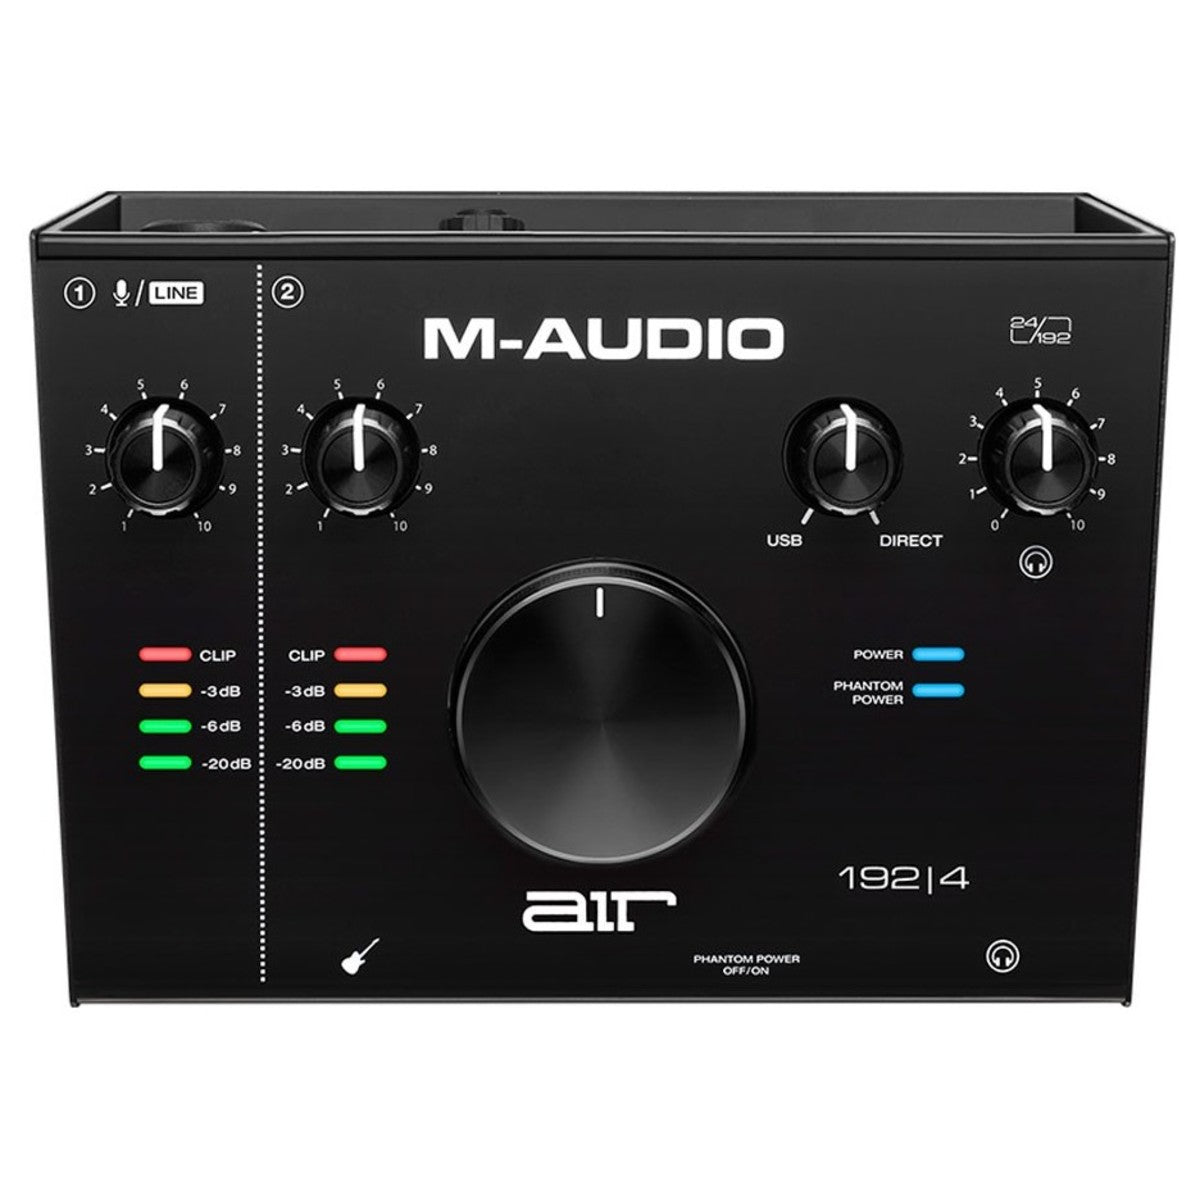 Audio Interface M-Audio AIR 192 4